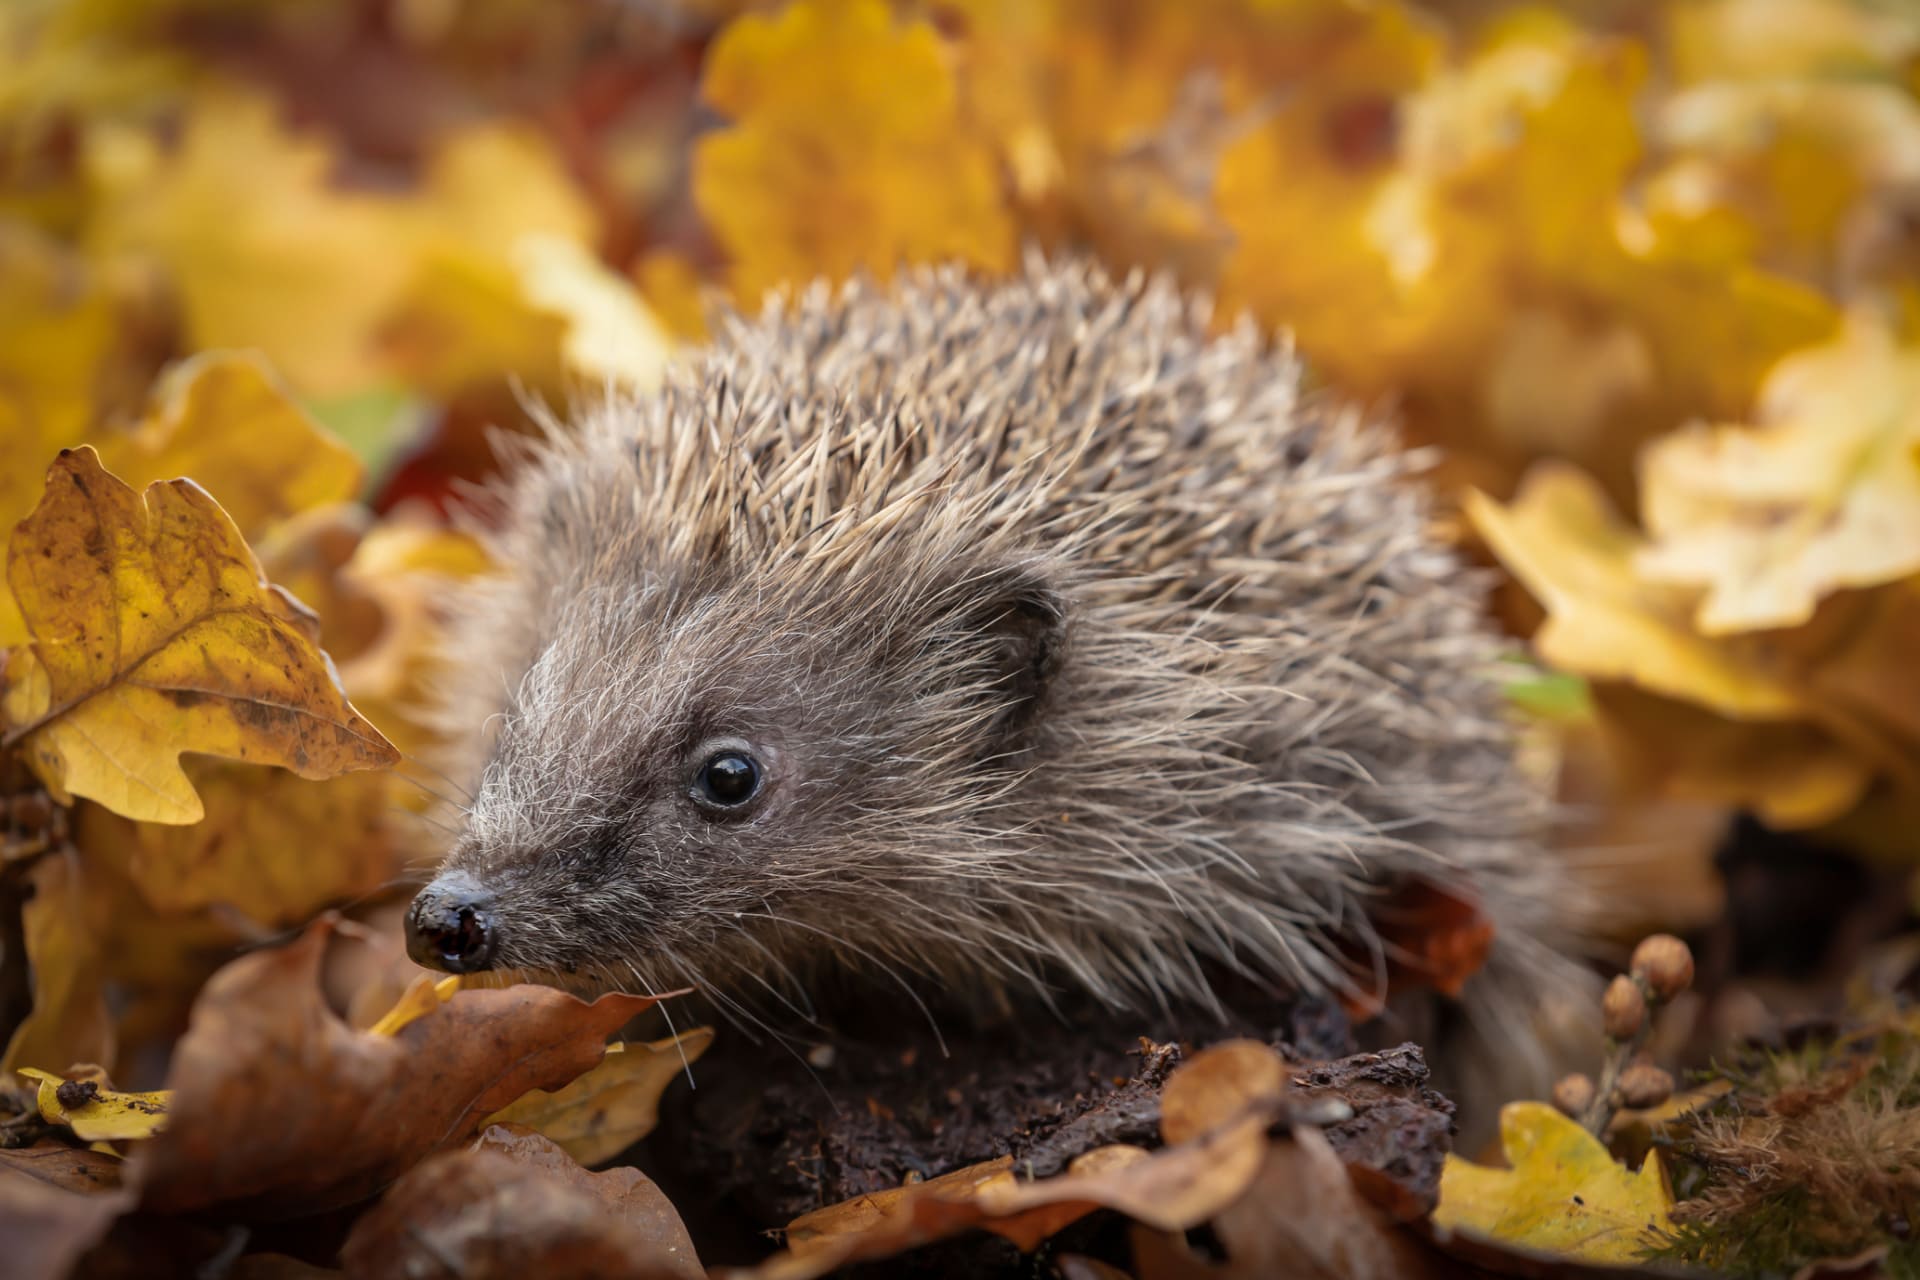 A hedgehog in fall leaves.